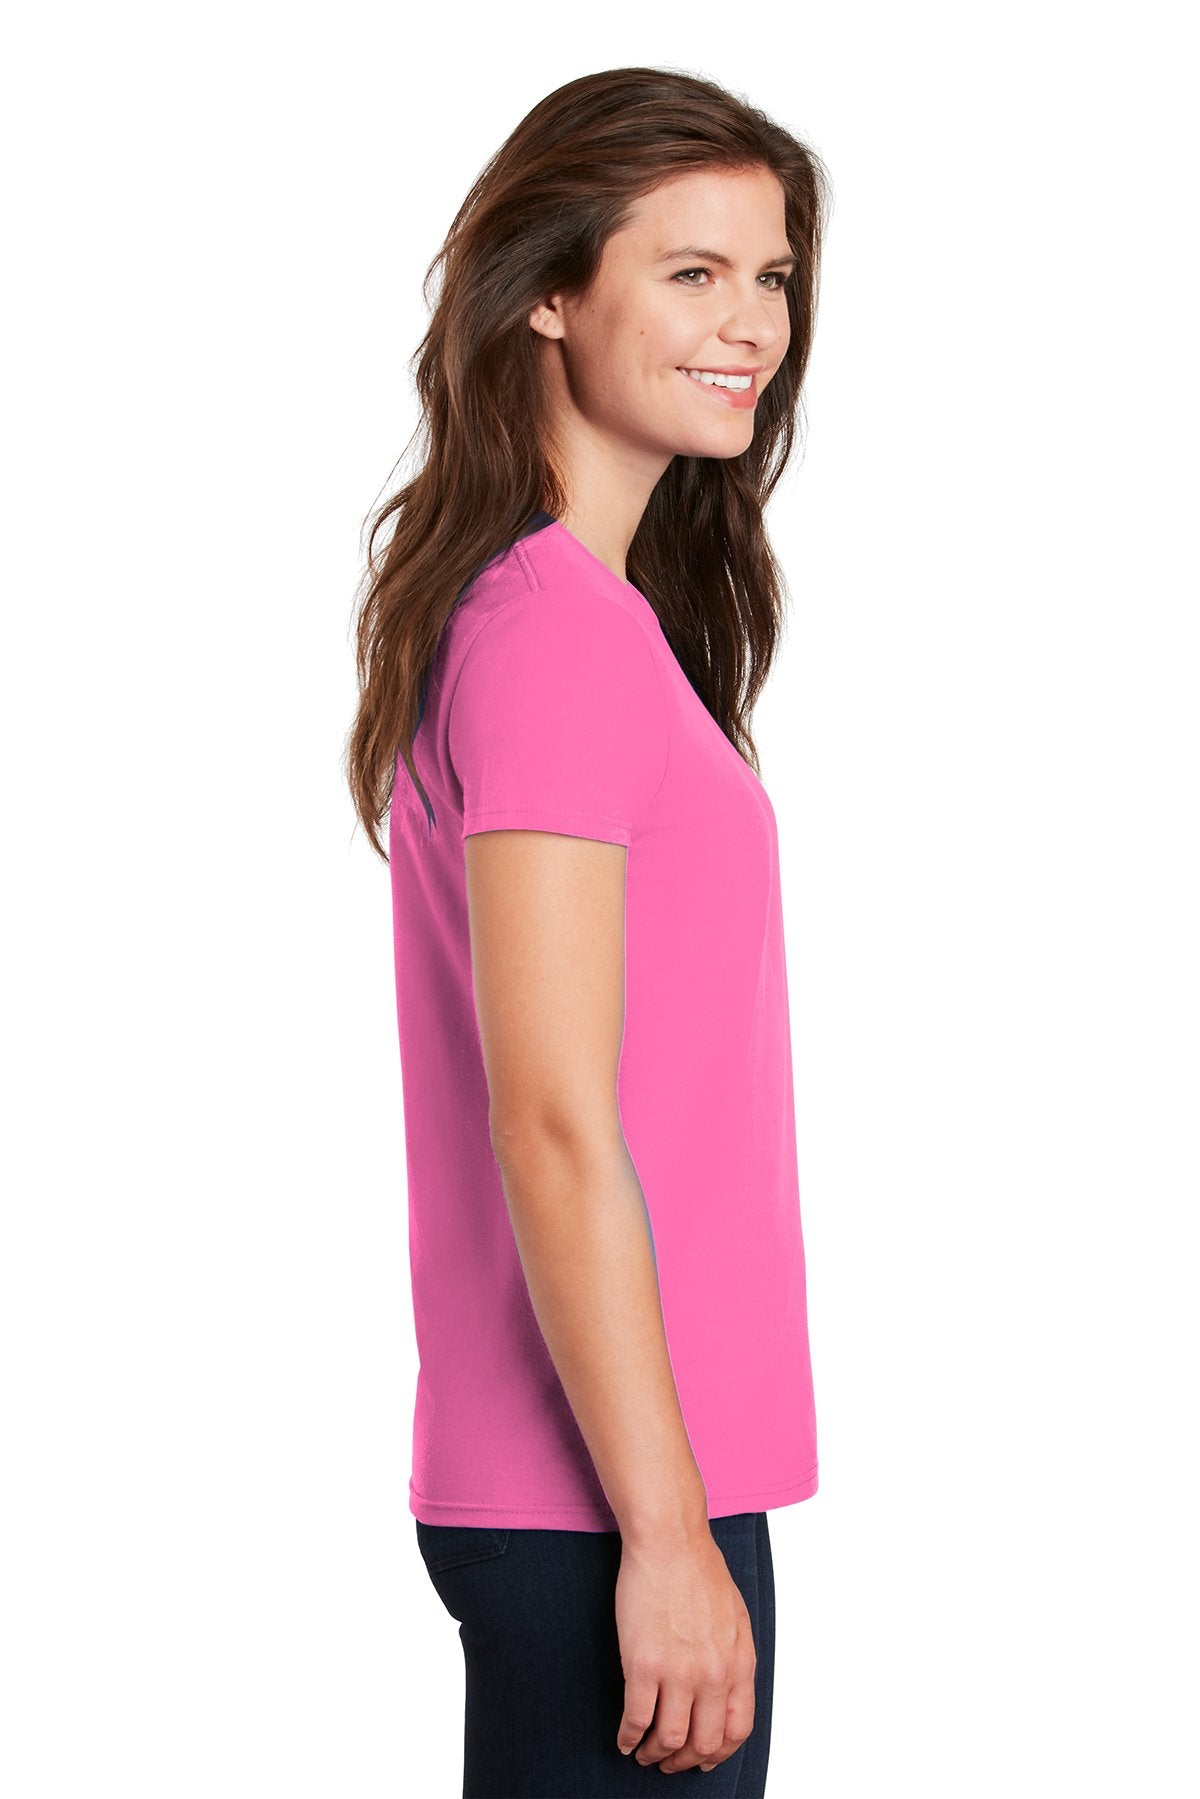 gildan ladies ultra cotton t shirt 2000l safety pink